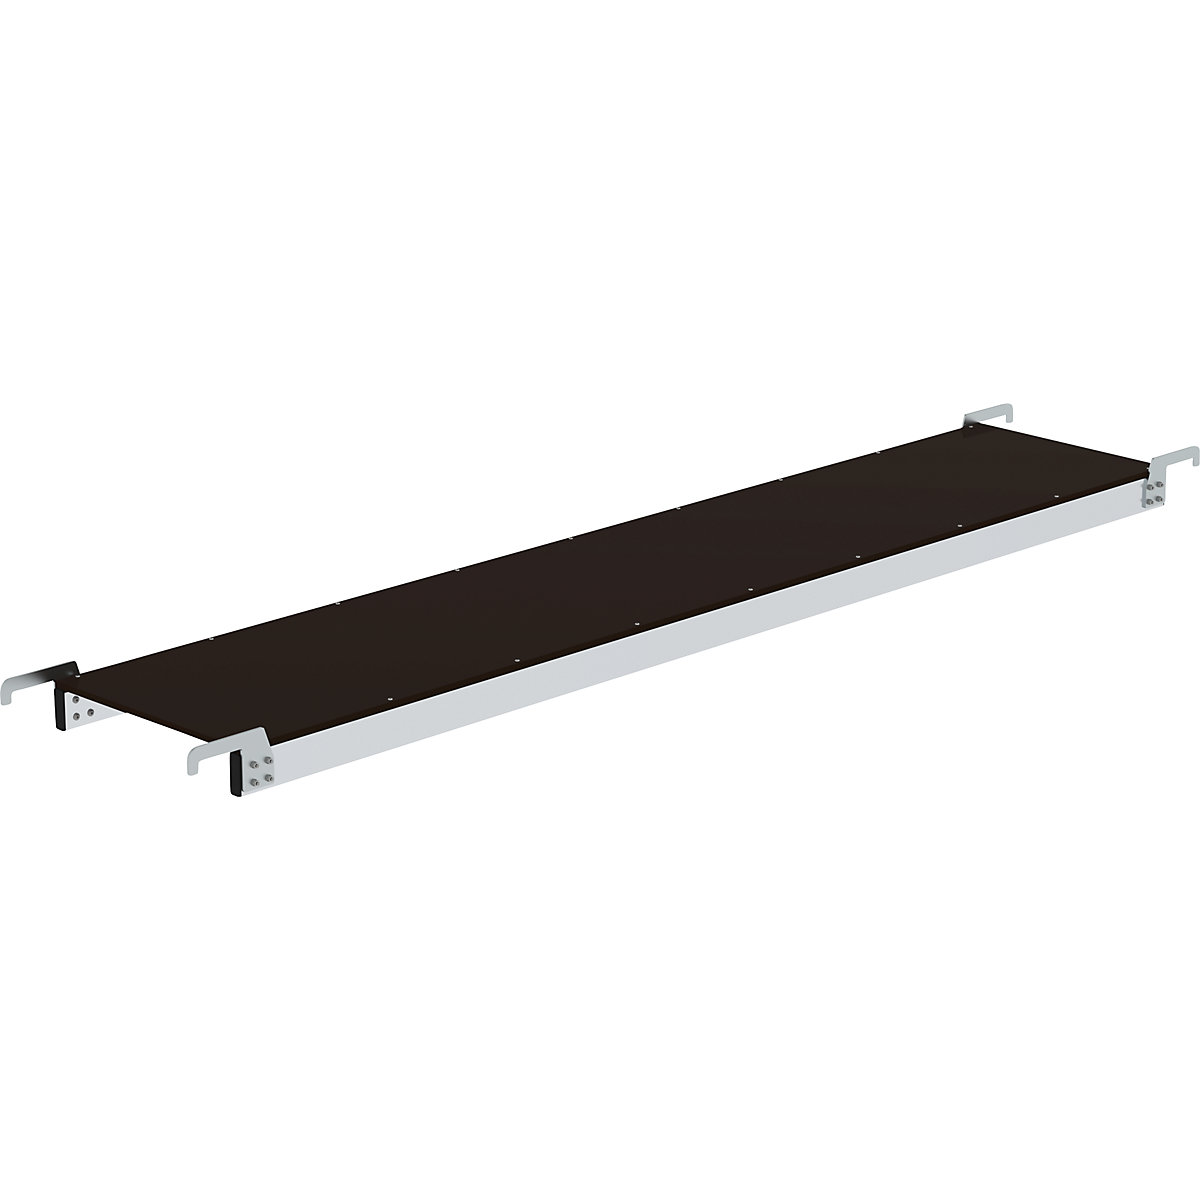 Inhangbaar platform – MUNK, voor inklapbare aluminium trap, lengte 2400 mm-2